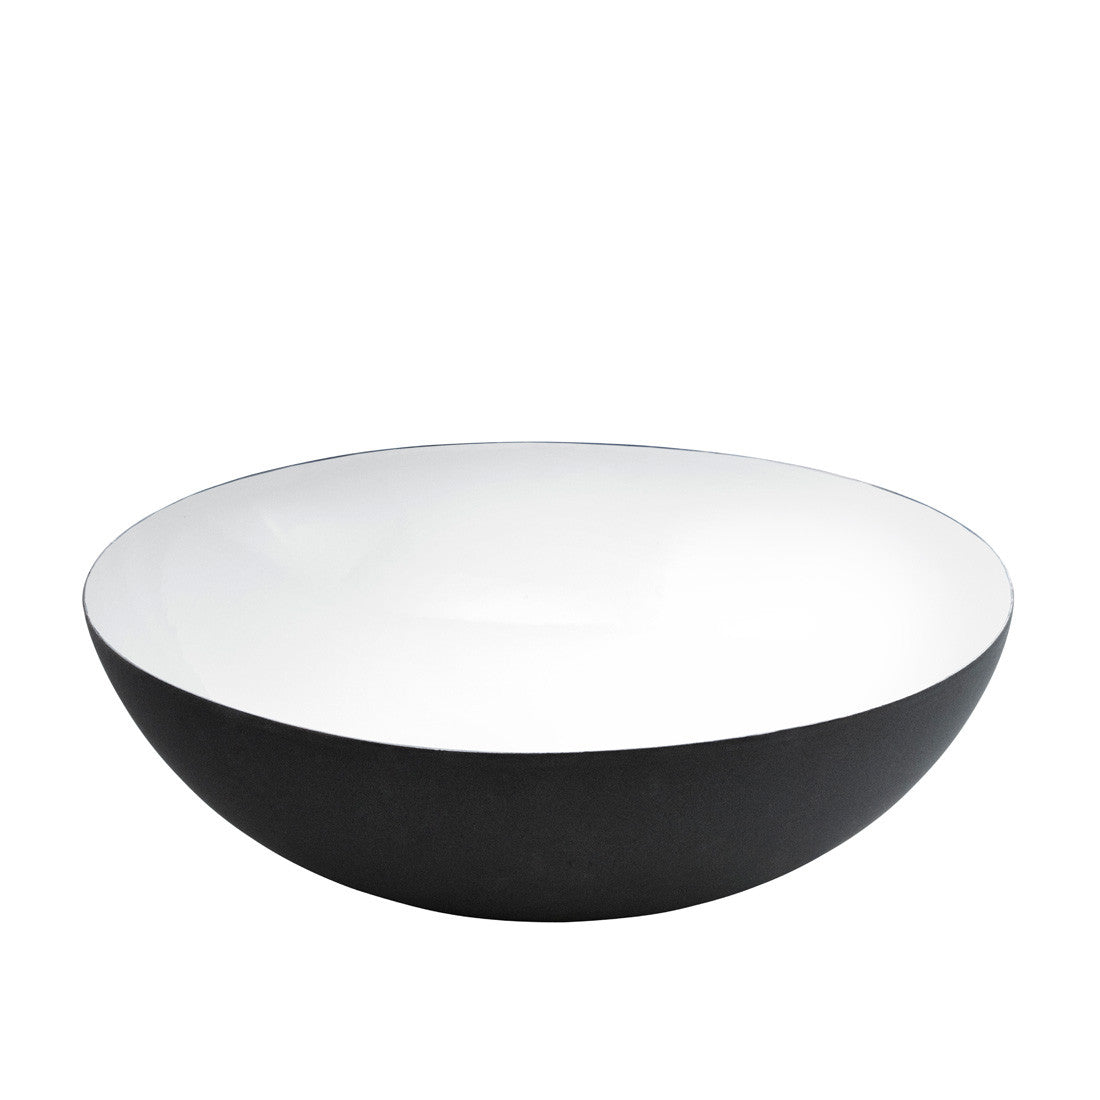 Krenit Bowl Large Ø38cm by Normann Copenhagen